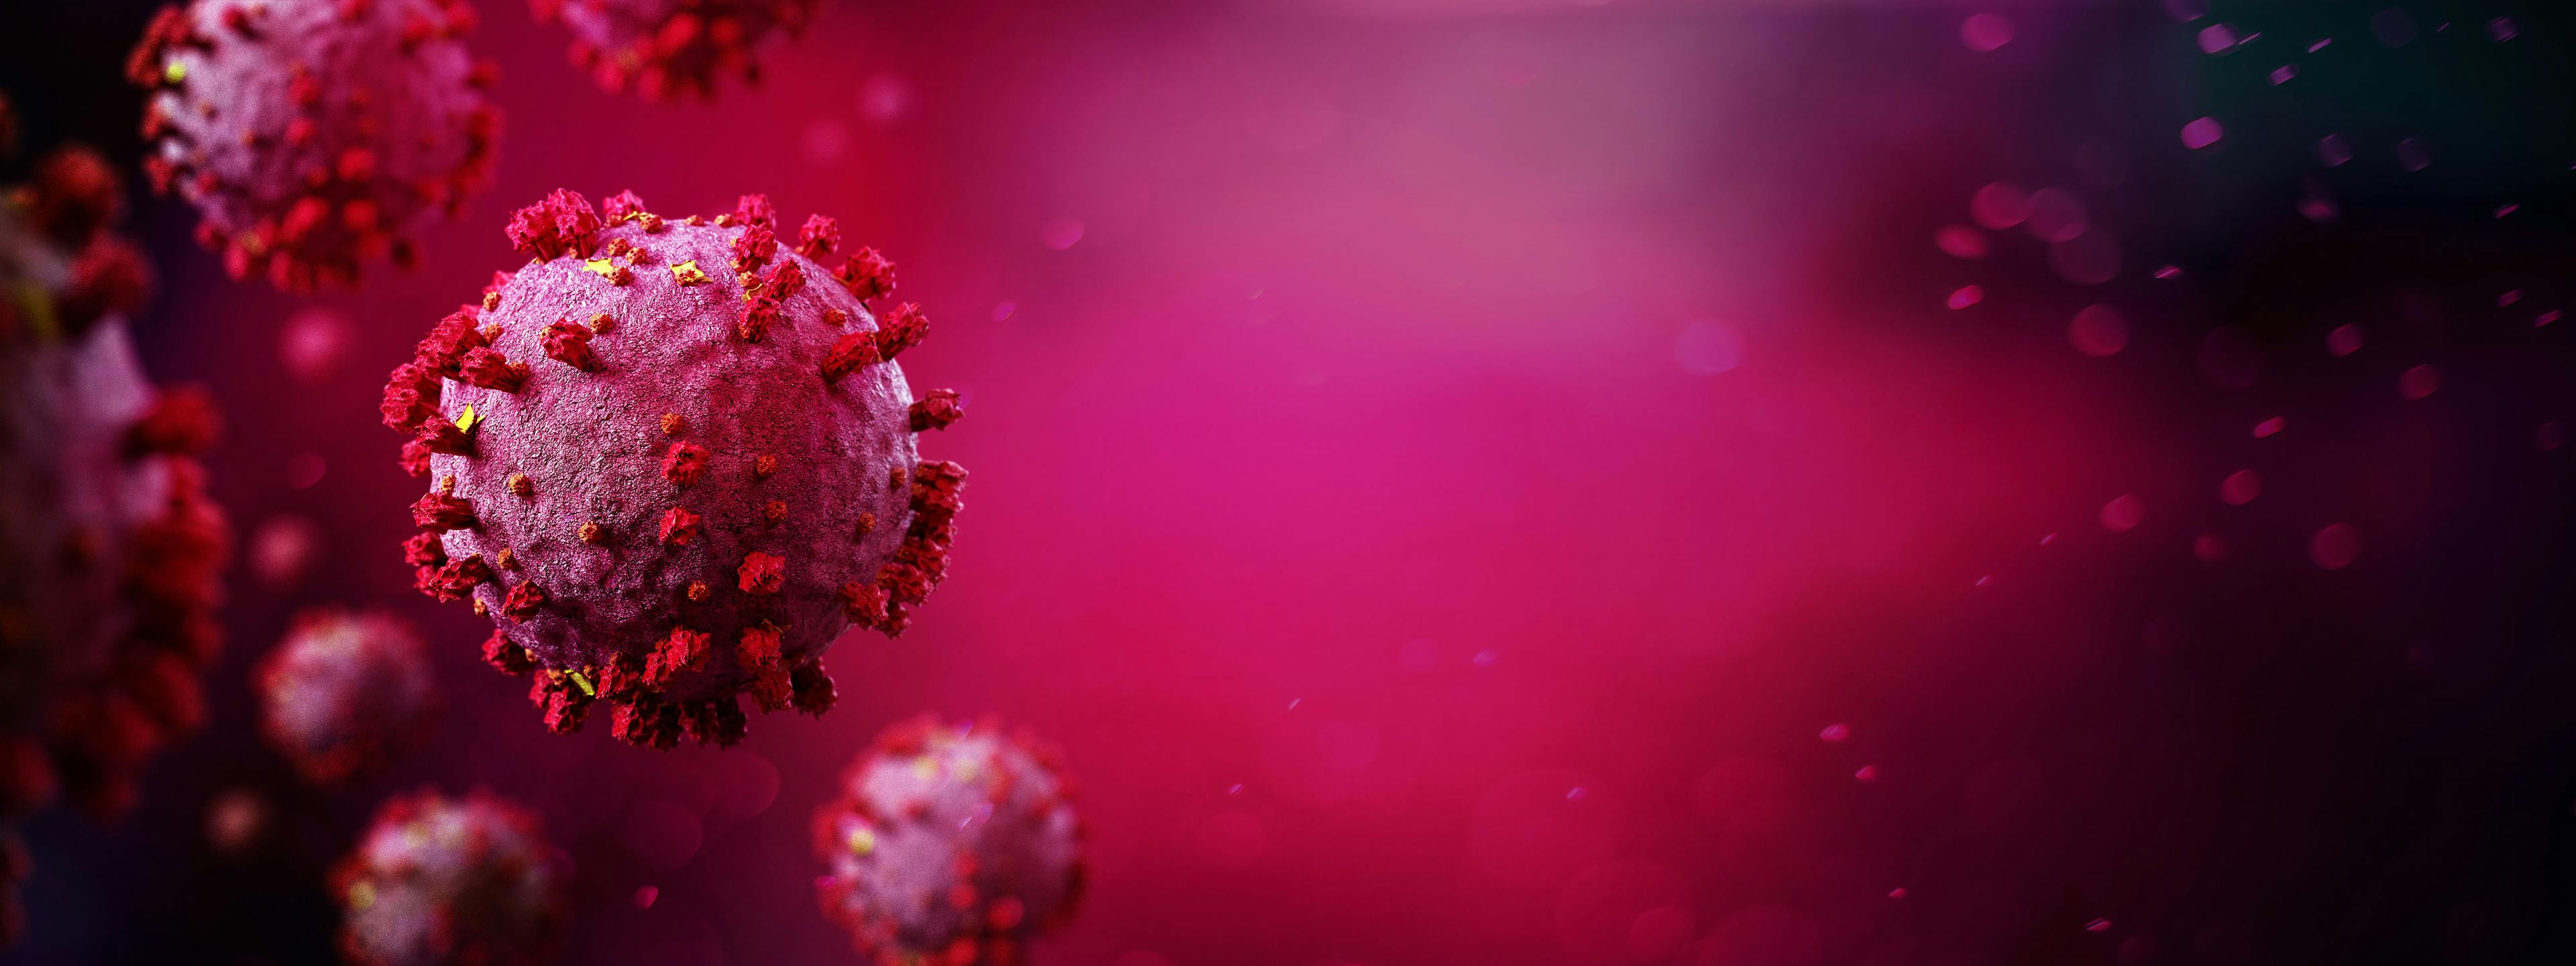 Coronavirus Covid-19 background - 3d rendering | Image Credit: © Production Perig - stock.adobe.com